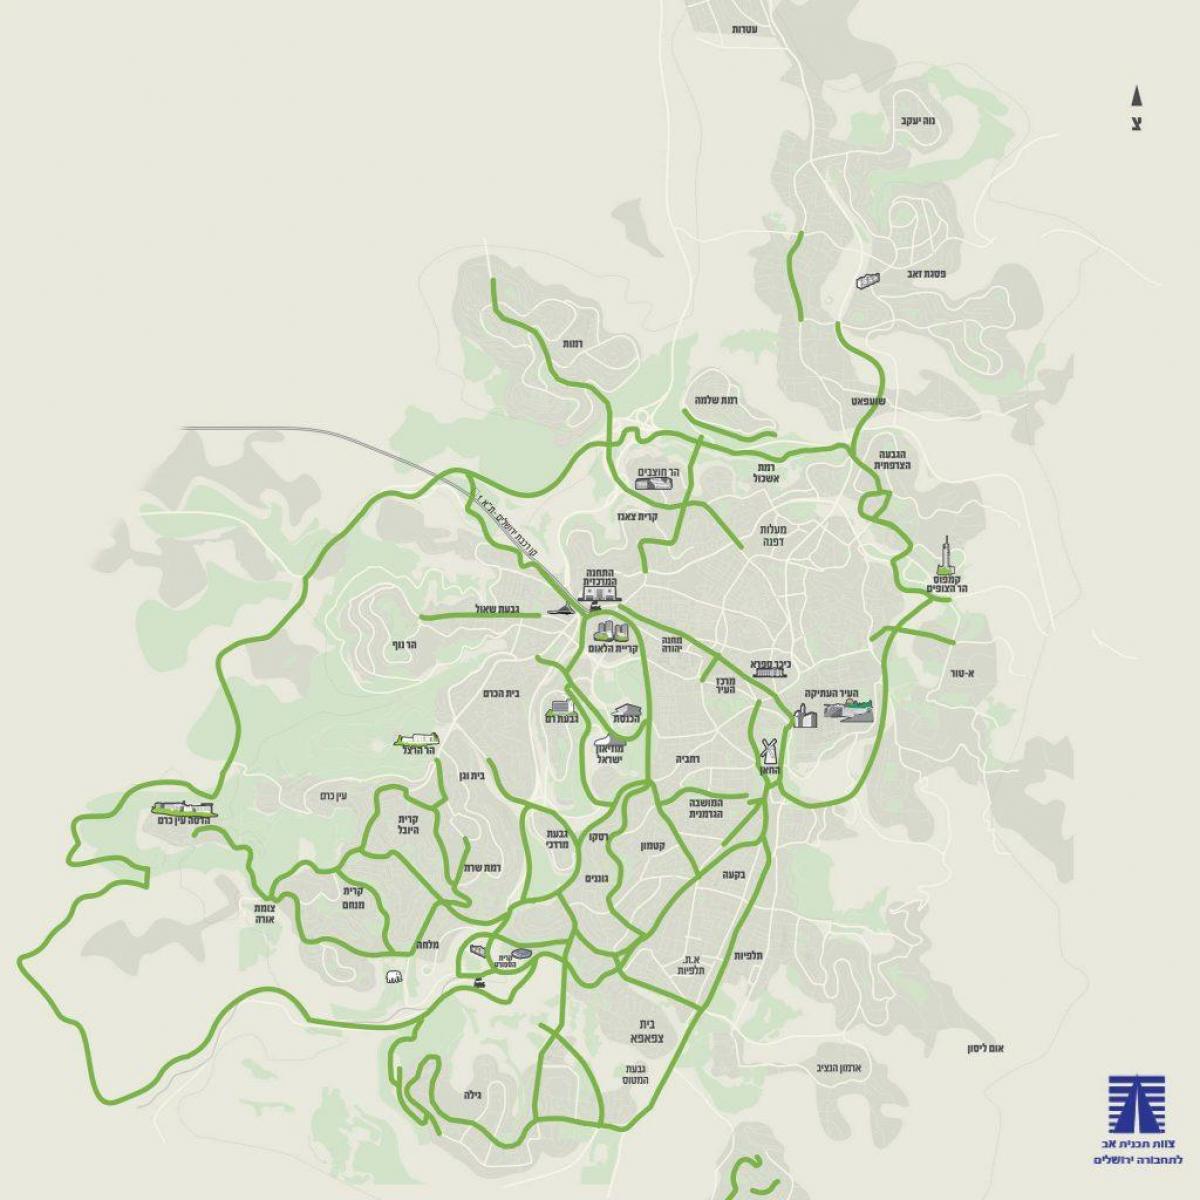 Jerusalem bike lane map